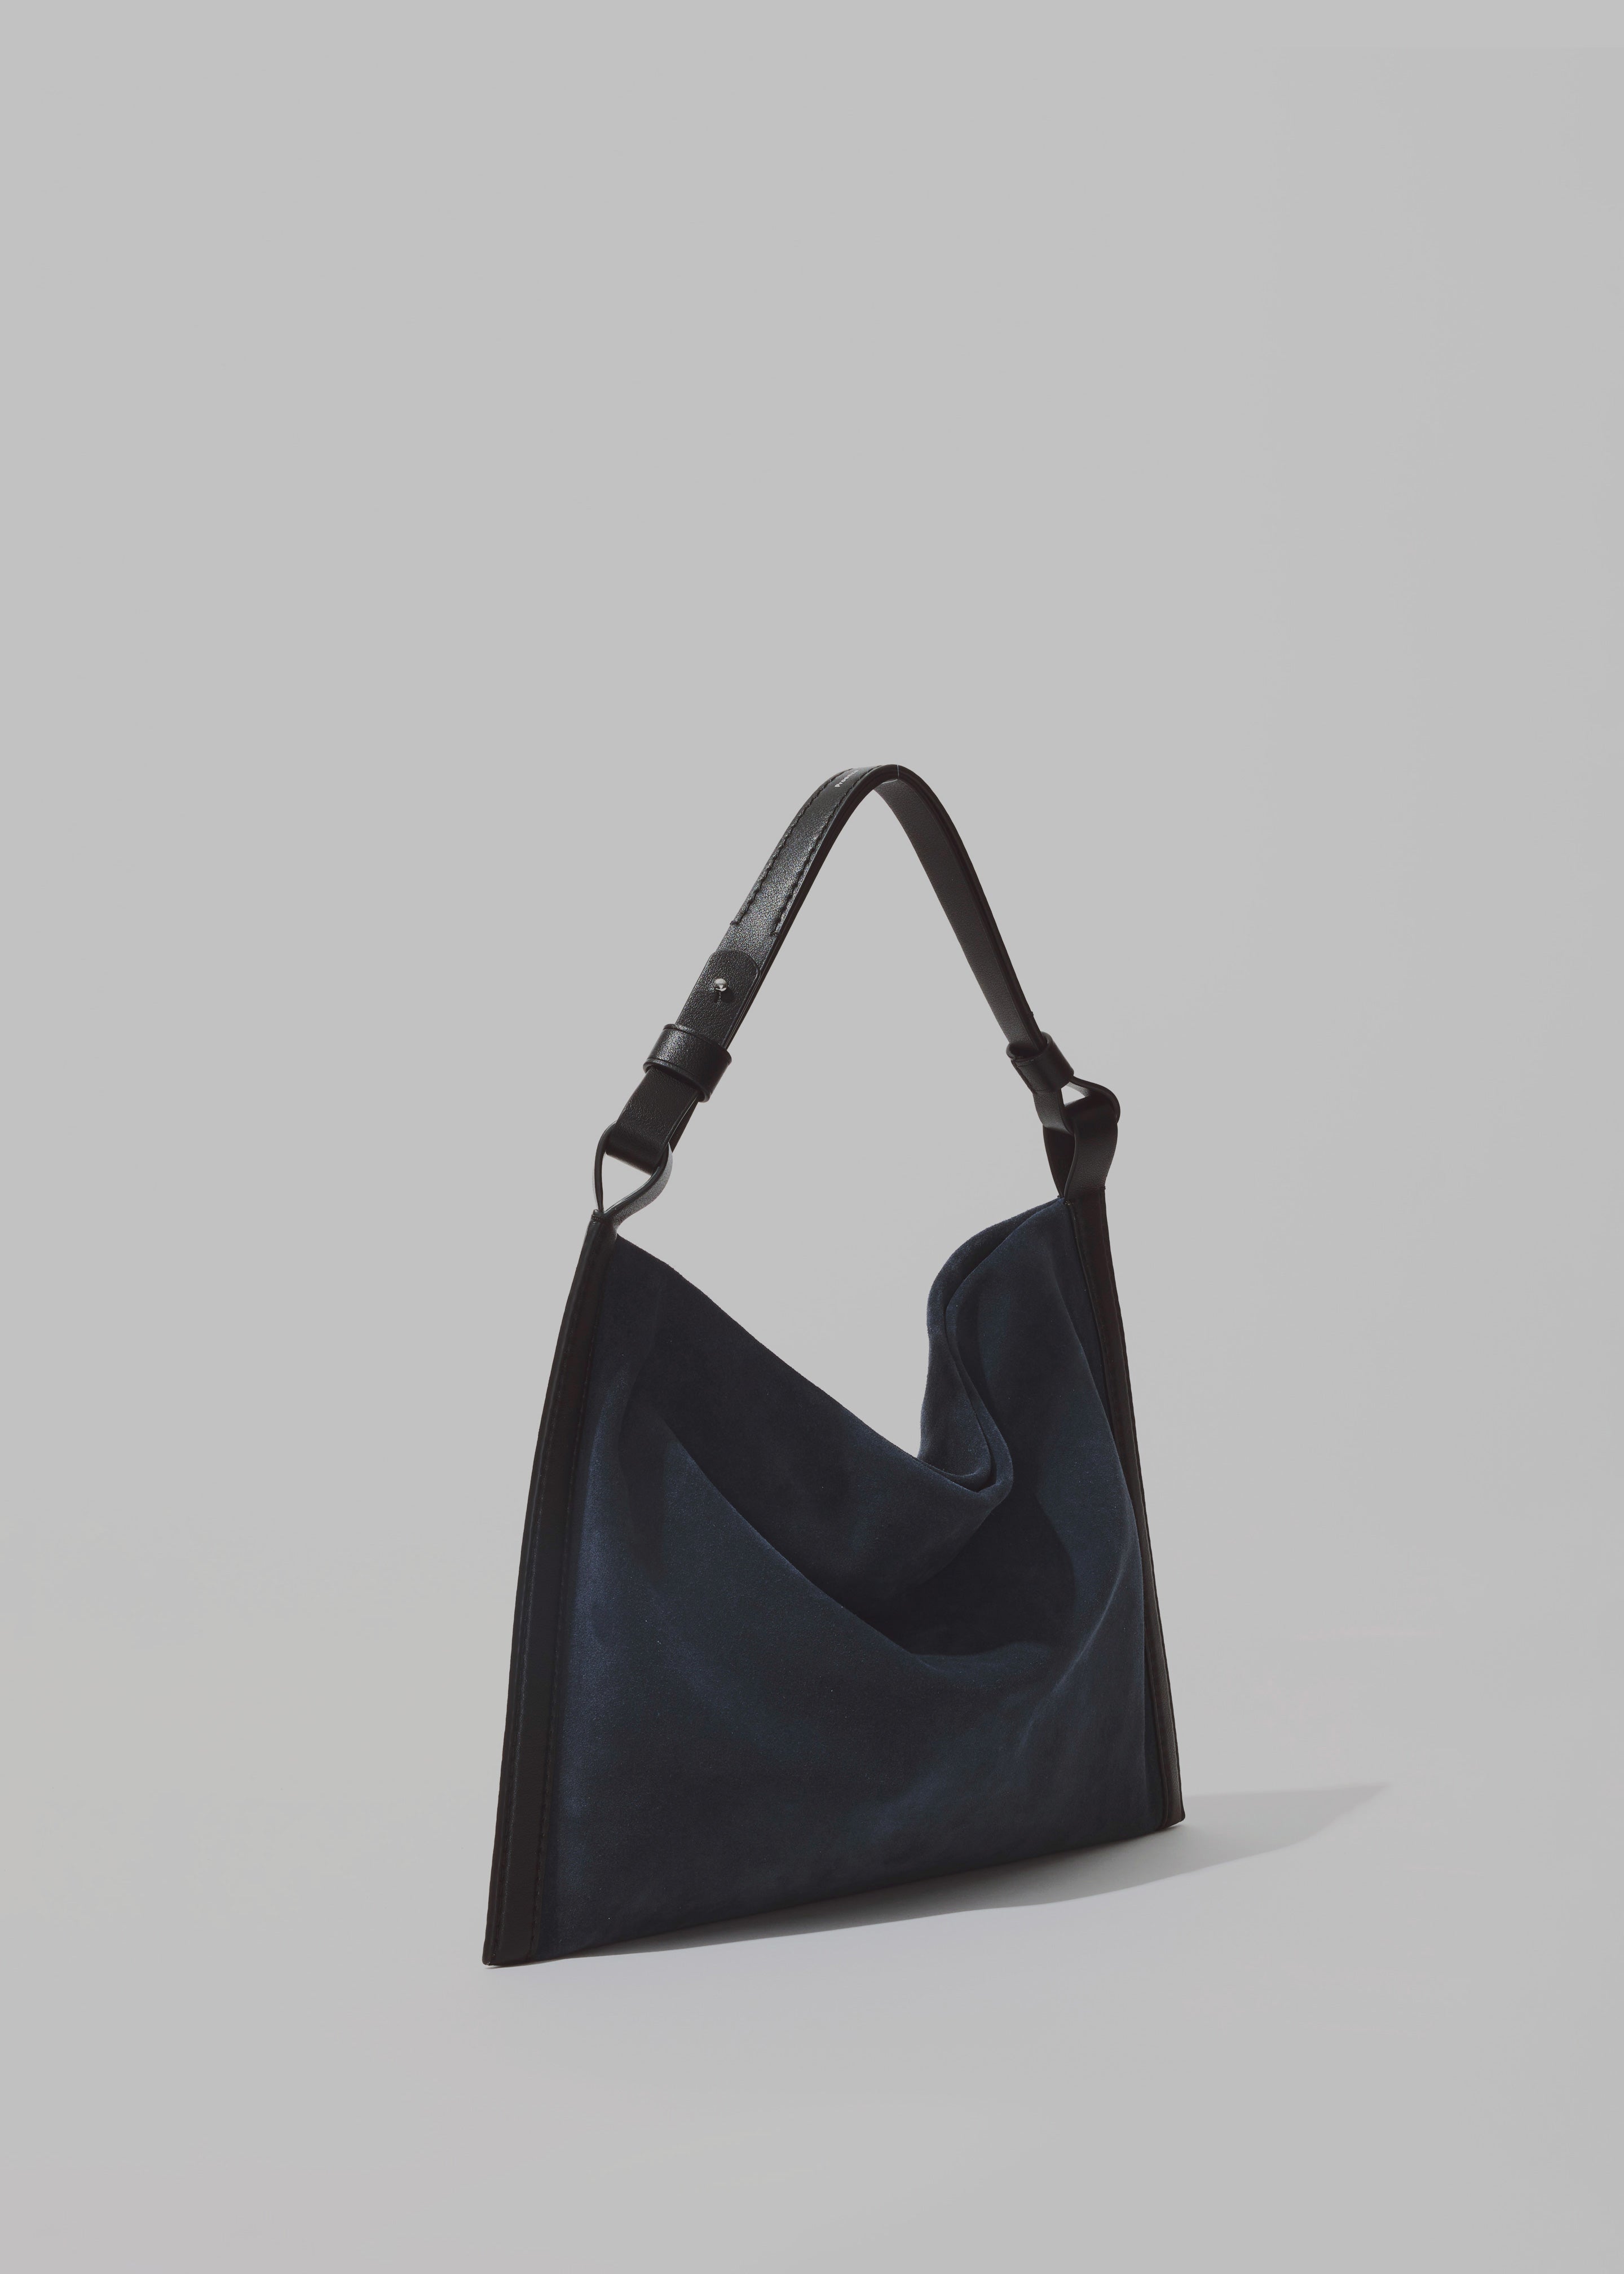 Proenza Schouler White Label Suede Minetta Bag - Navy/Black - 7